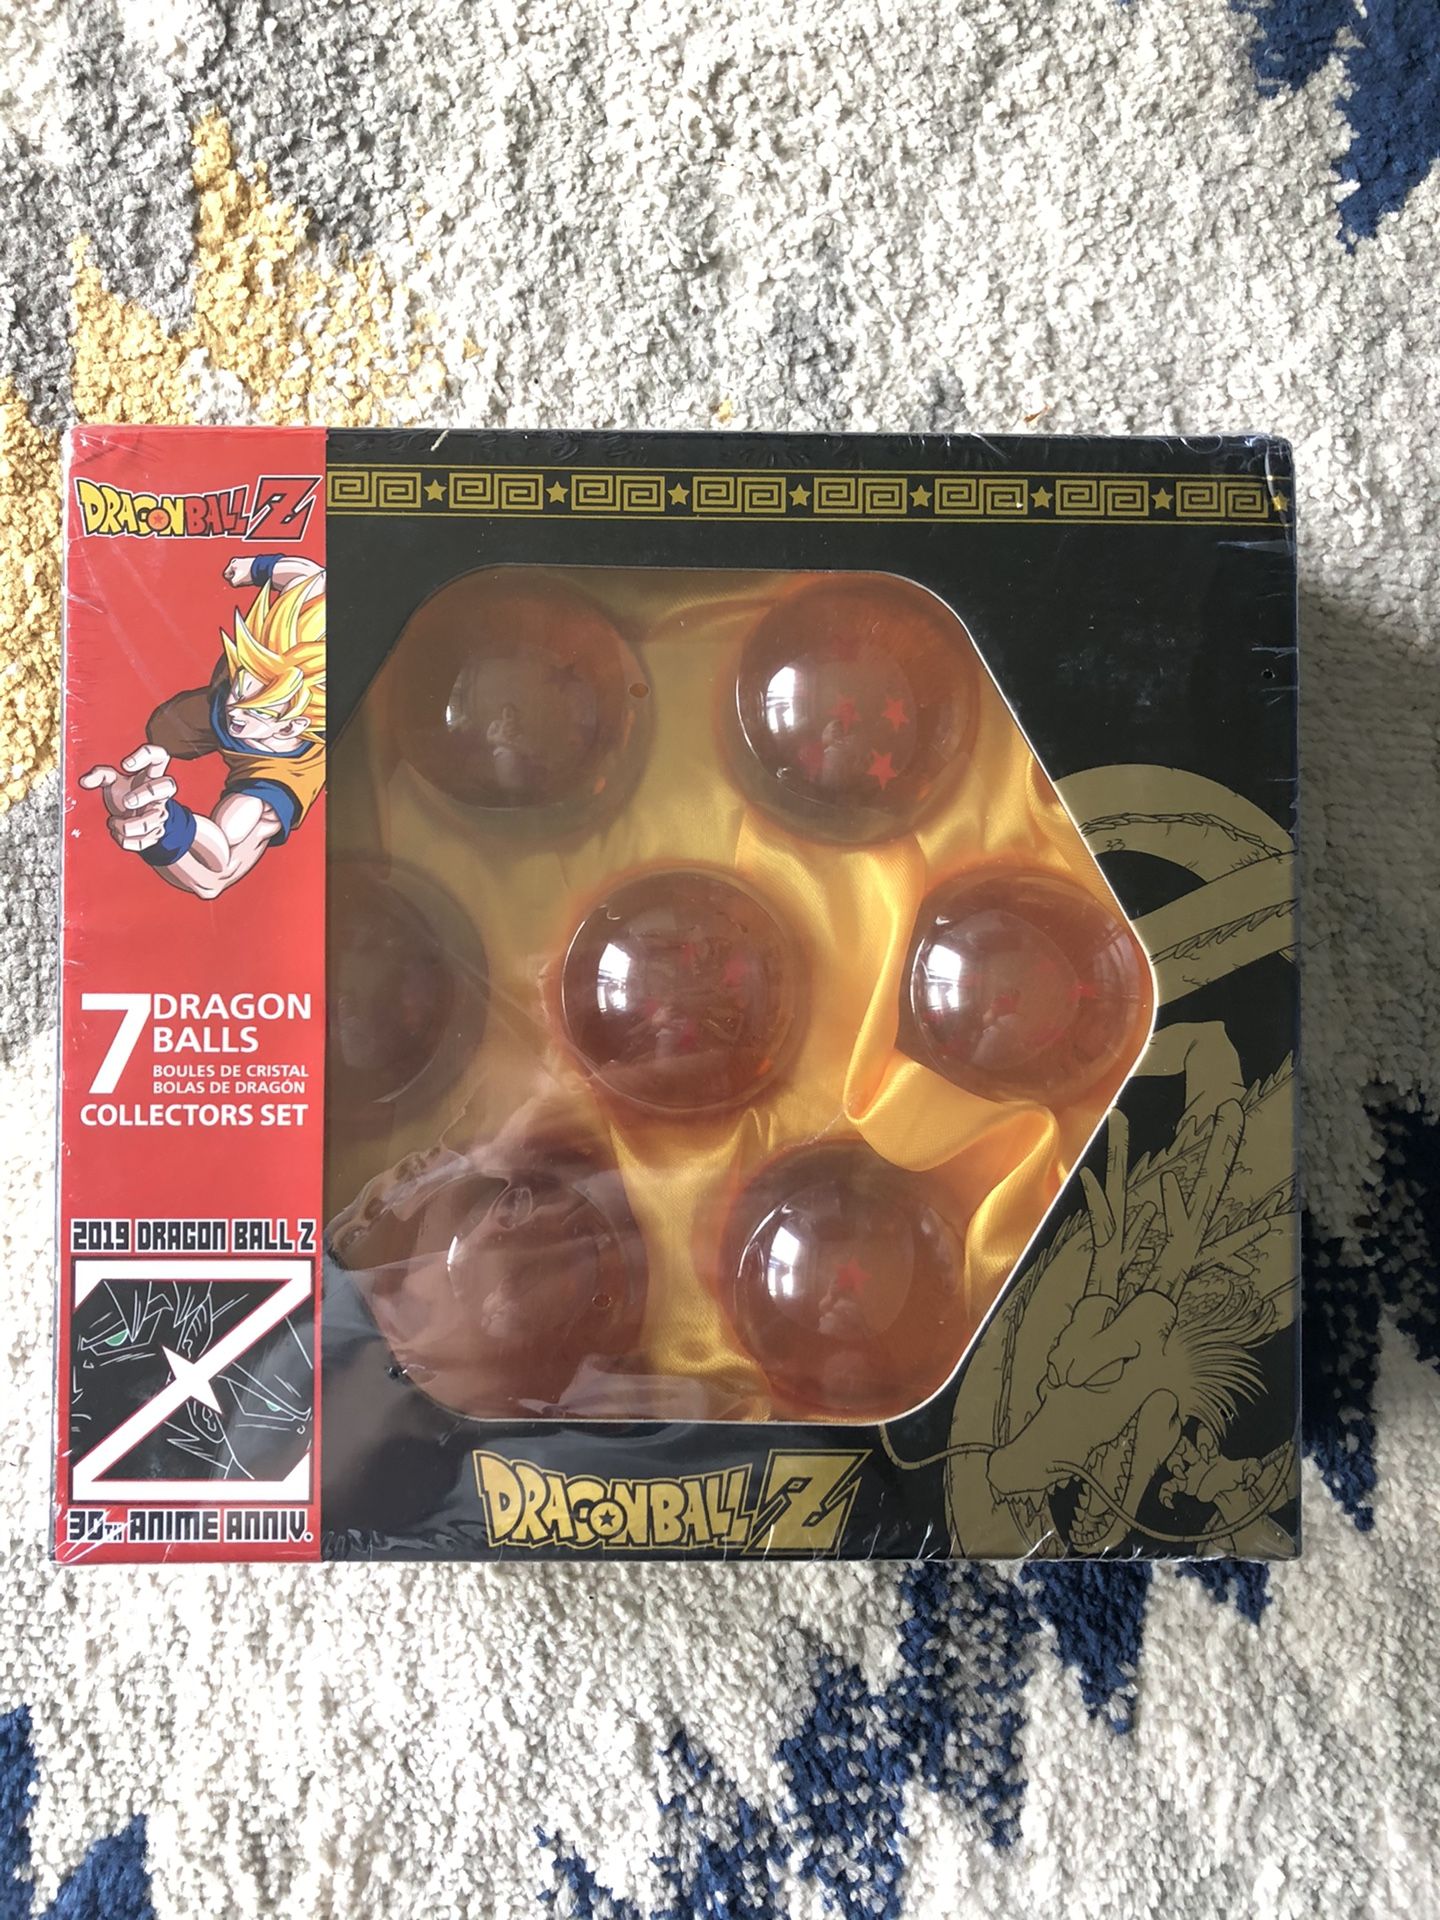 Dragonball Z Collector set Crystal dragon balls